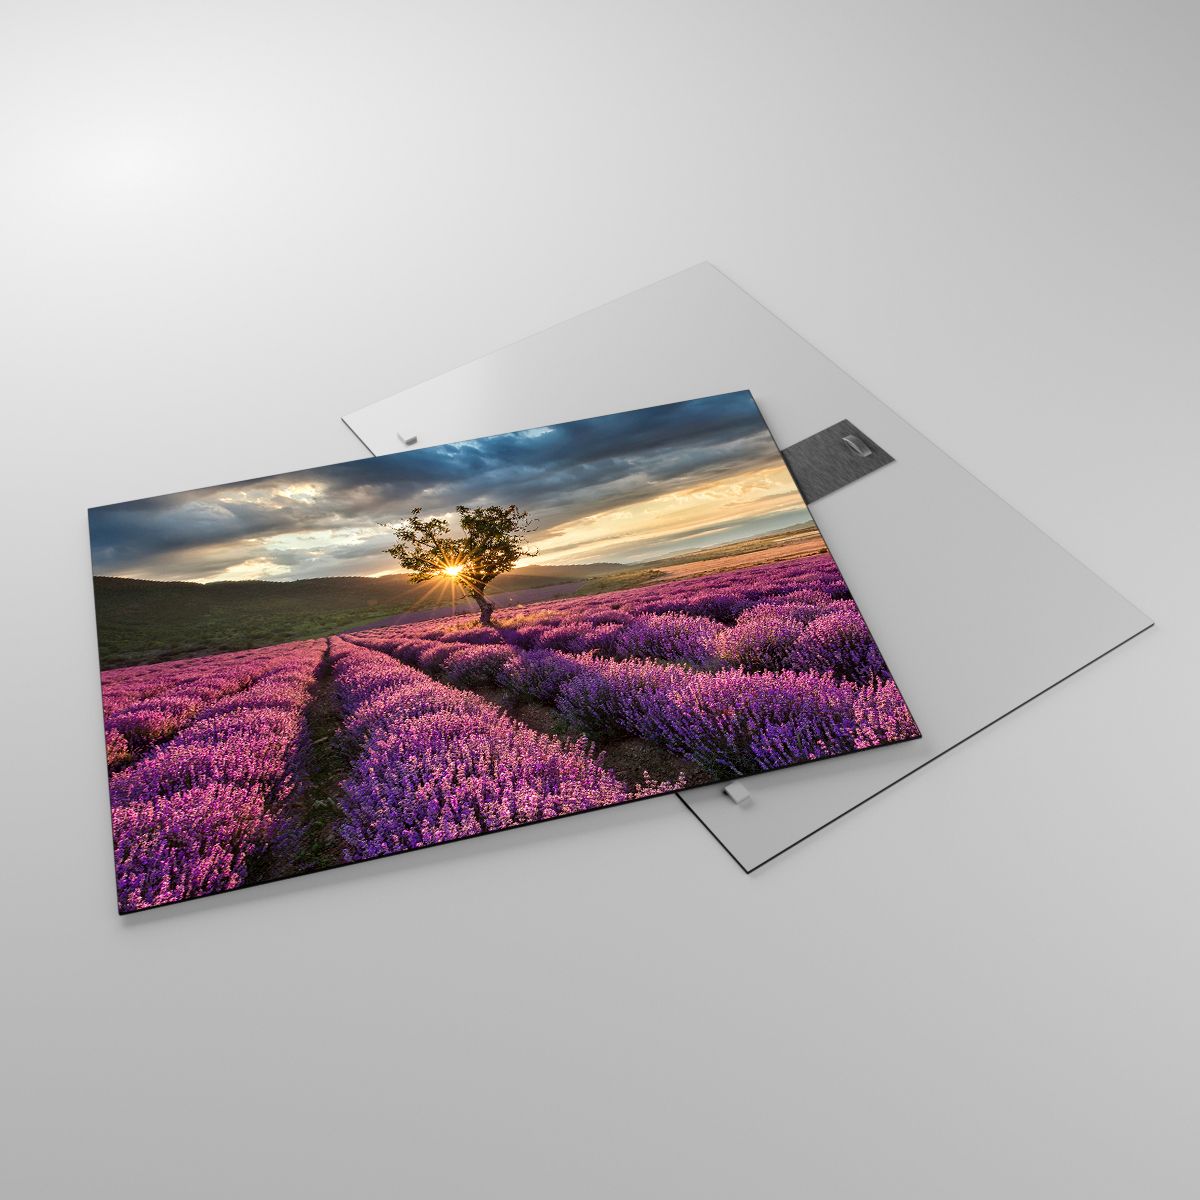 Glasbild Landschaft, Glasbild Lavendel, Glasbild Provence, Glasbild Lavendelfeld, Glasbild Der Sonnenuntergang